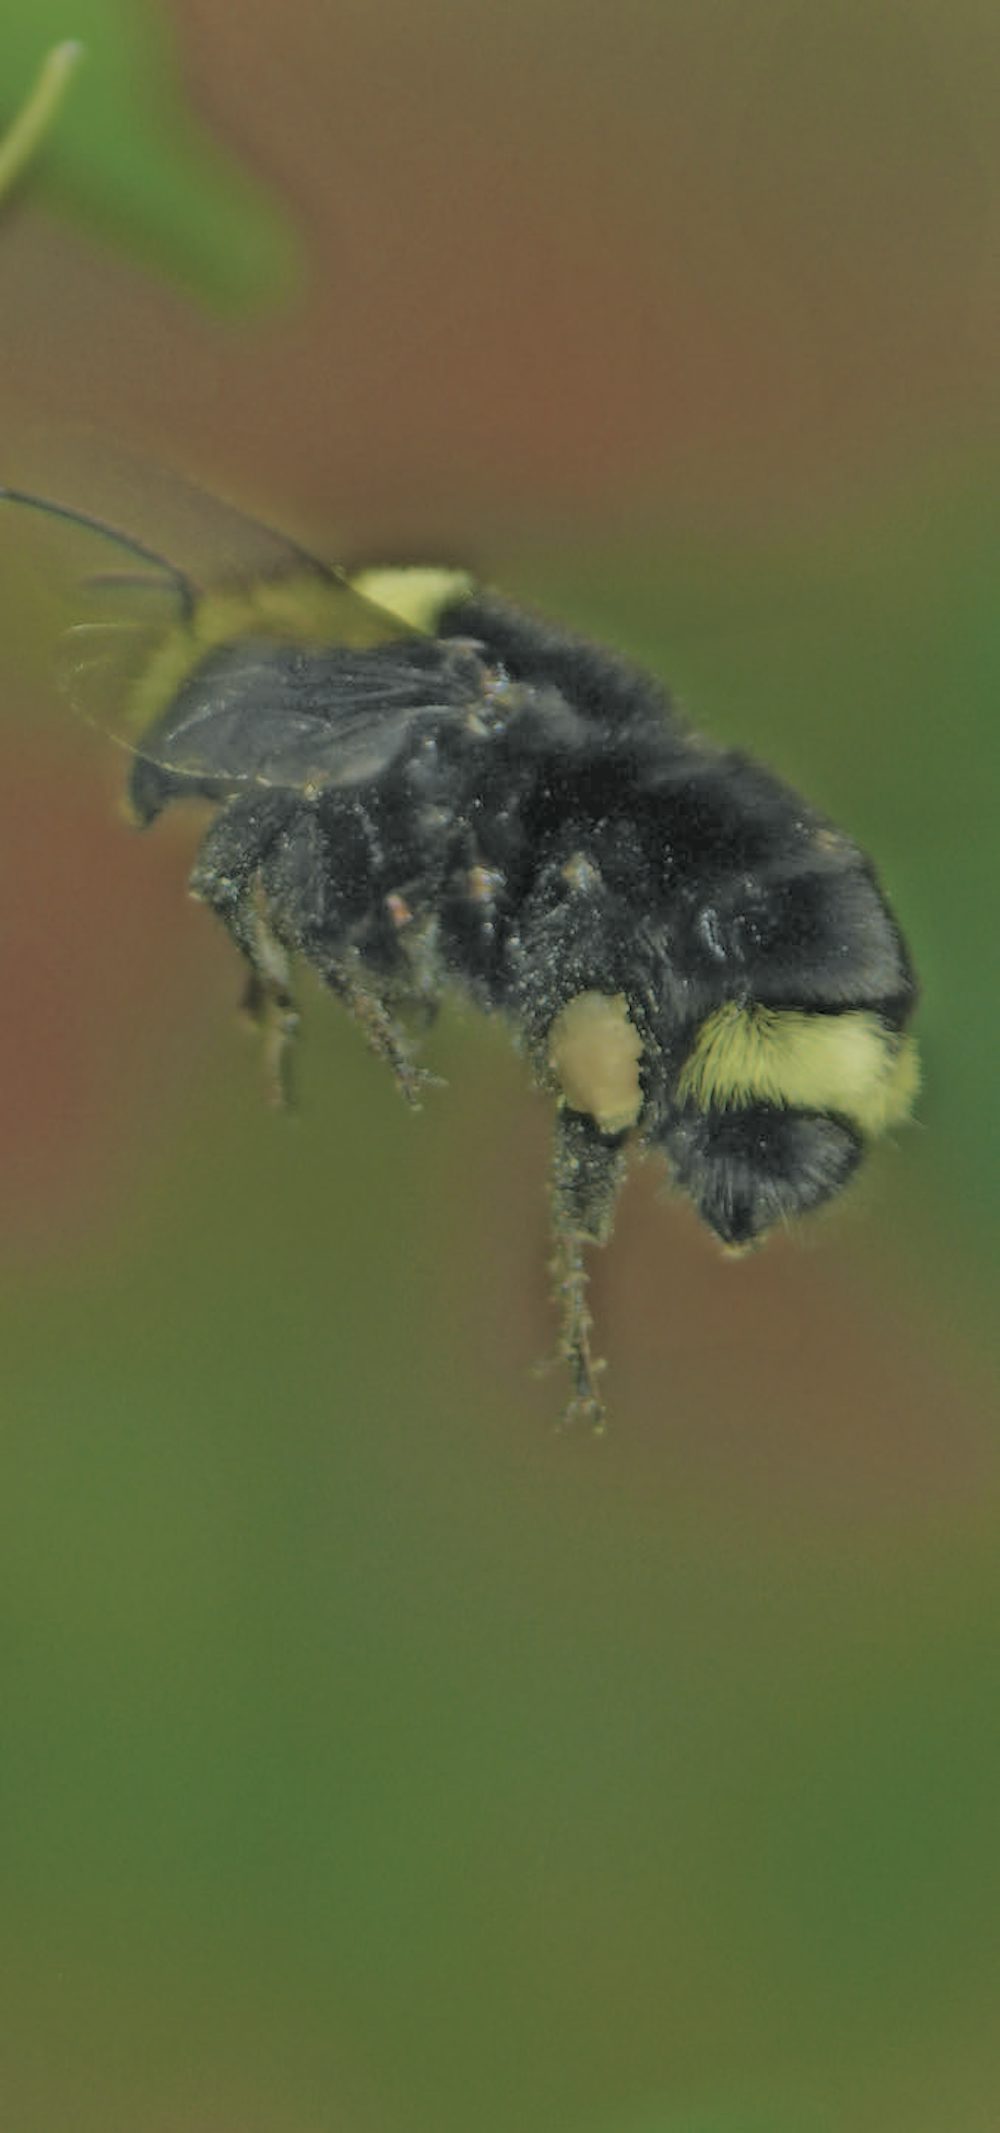 A close-up of a honeybee in flight